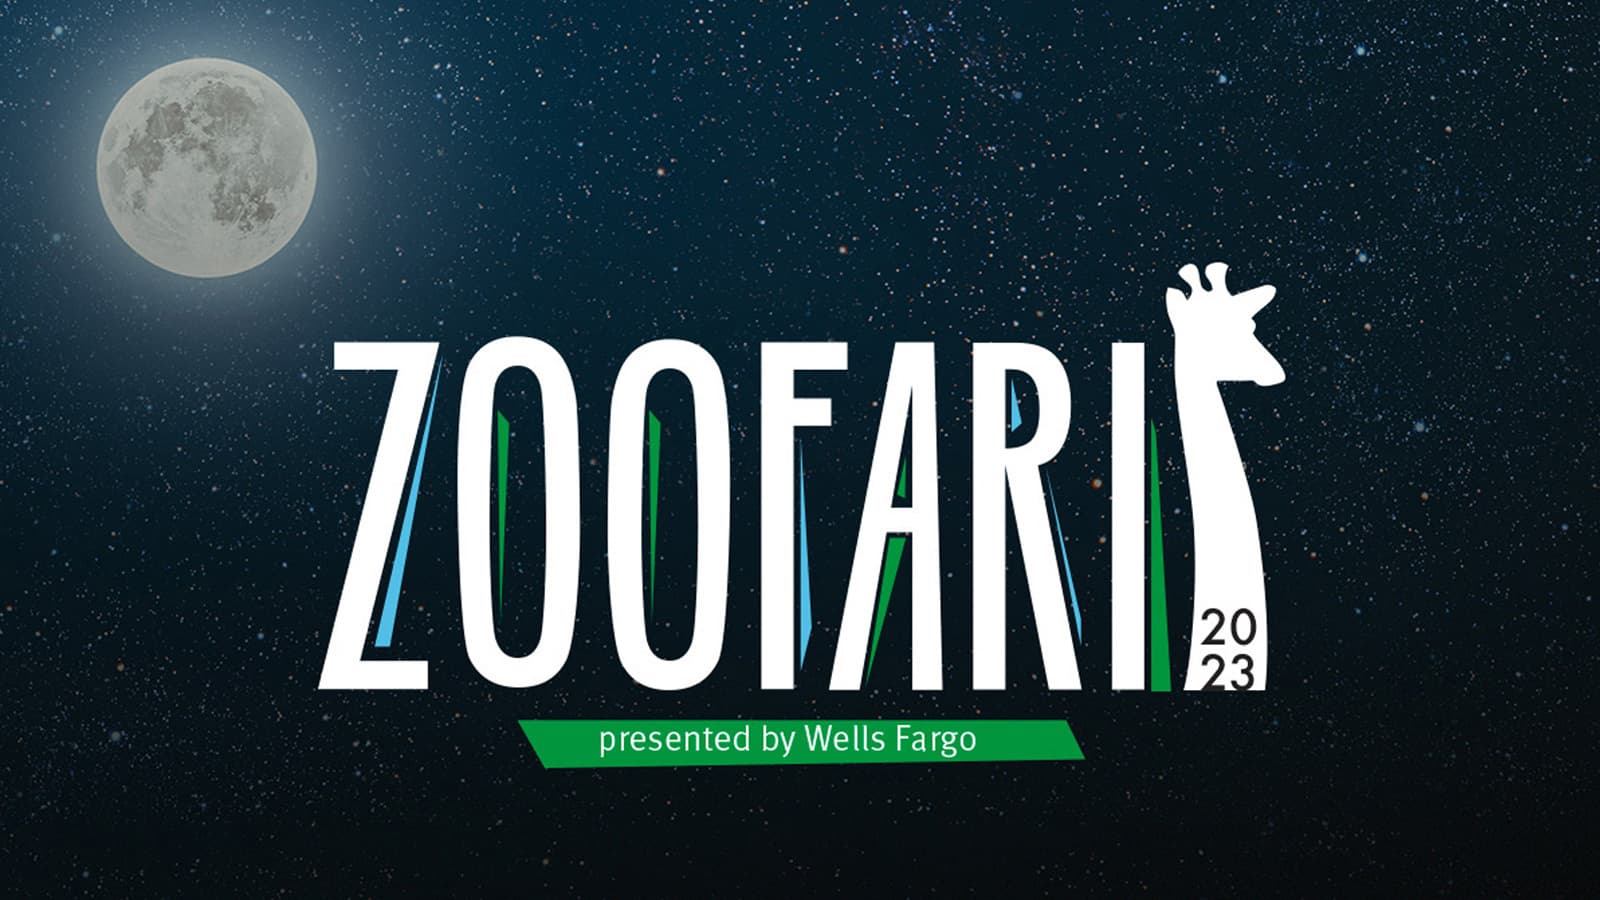 Zoofari 2023 presented by Wells Fargo